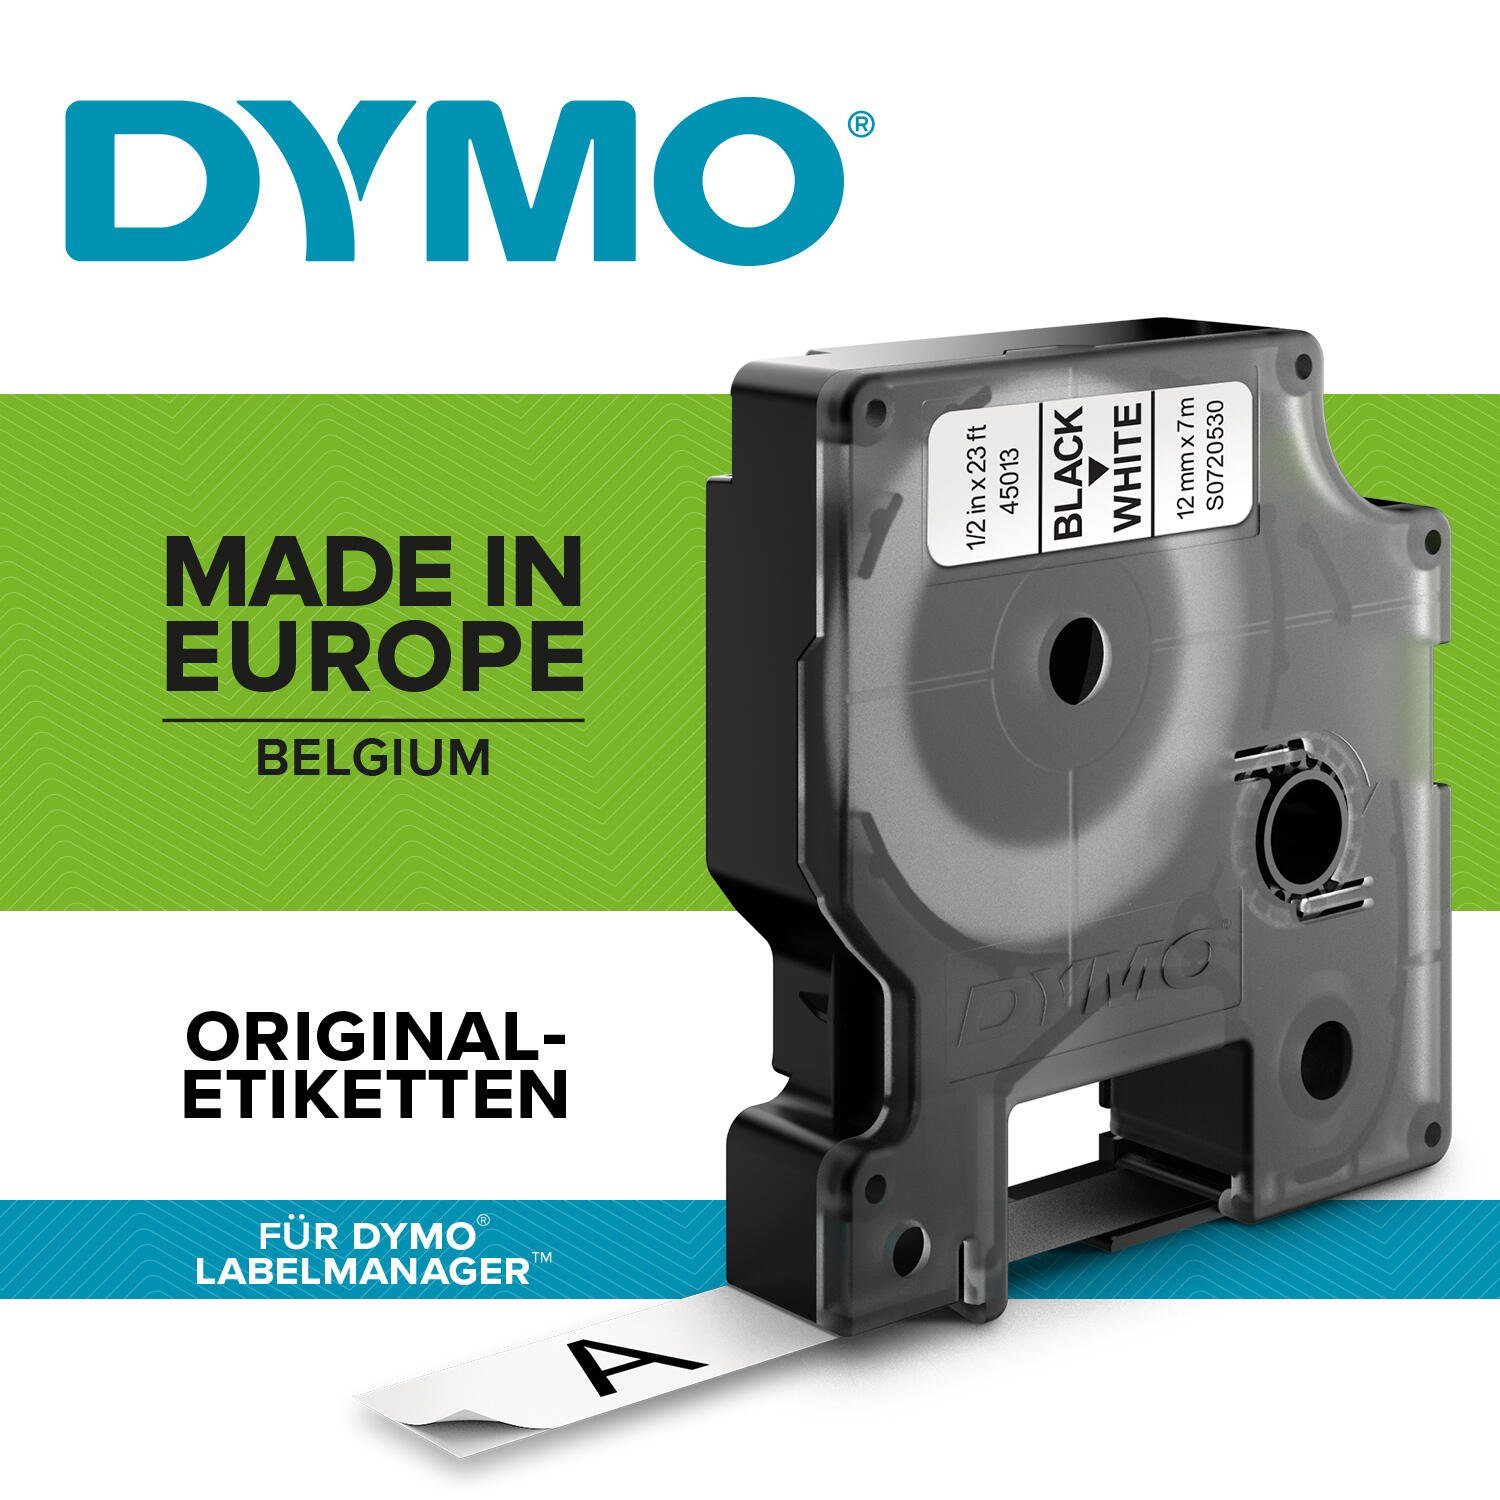 DYMO Etikettenpapier Dymo 2093097